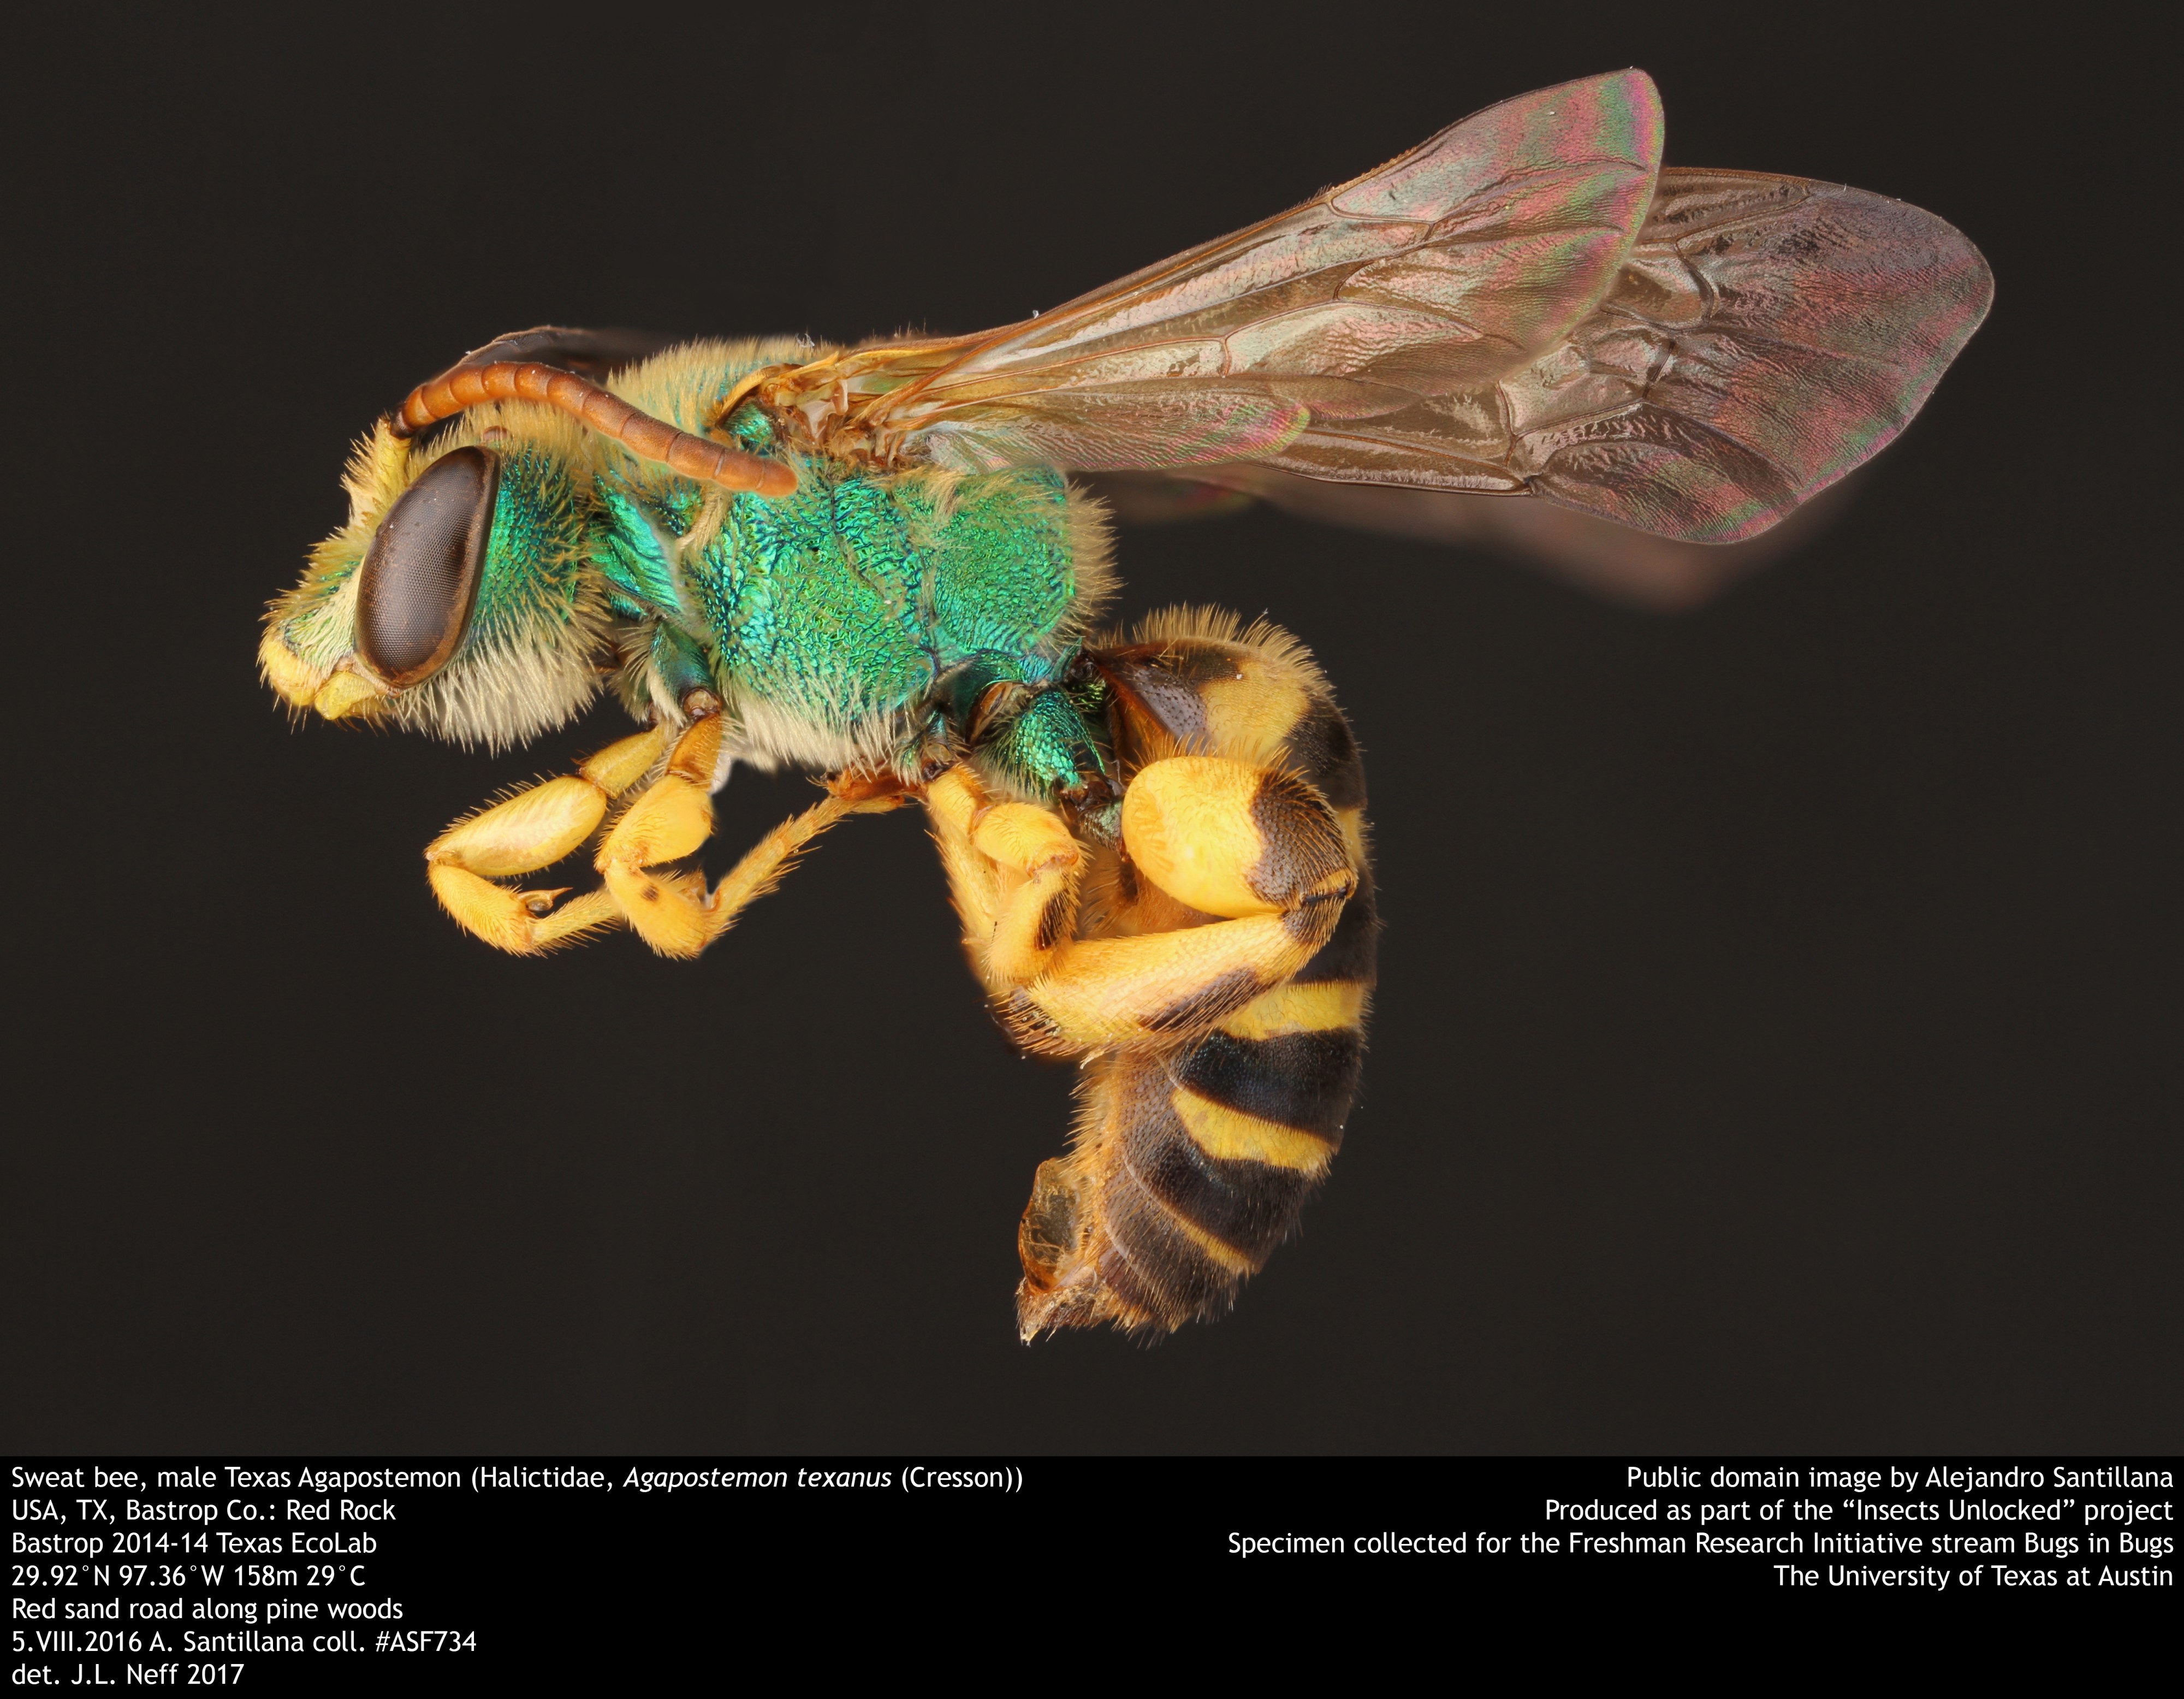 Sweat bee, male Texas Agapostemon (Halictidae, Agapostemon texanus (Cresson)) (35635629626)